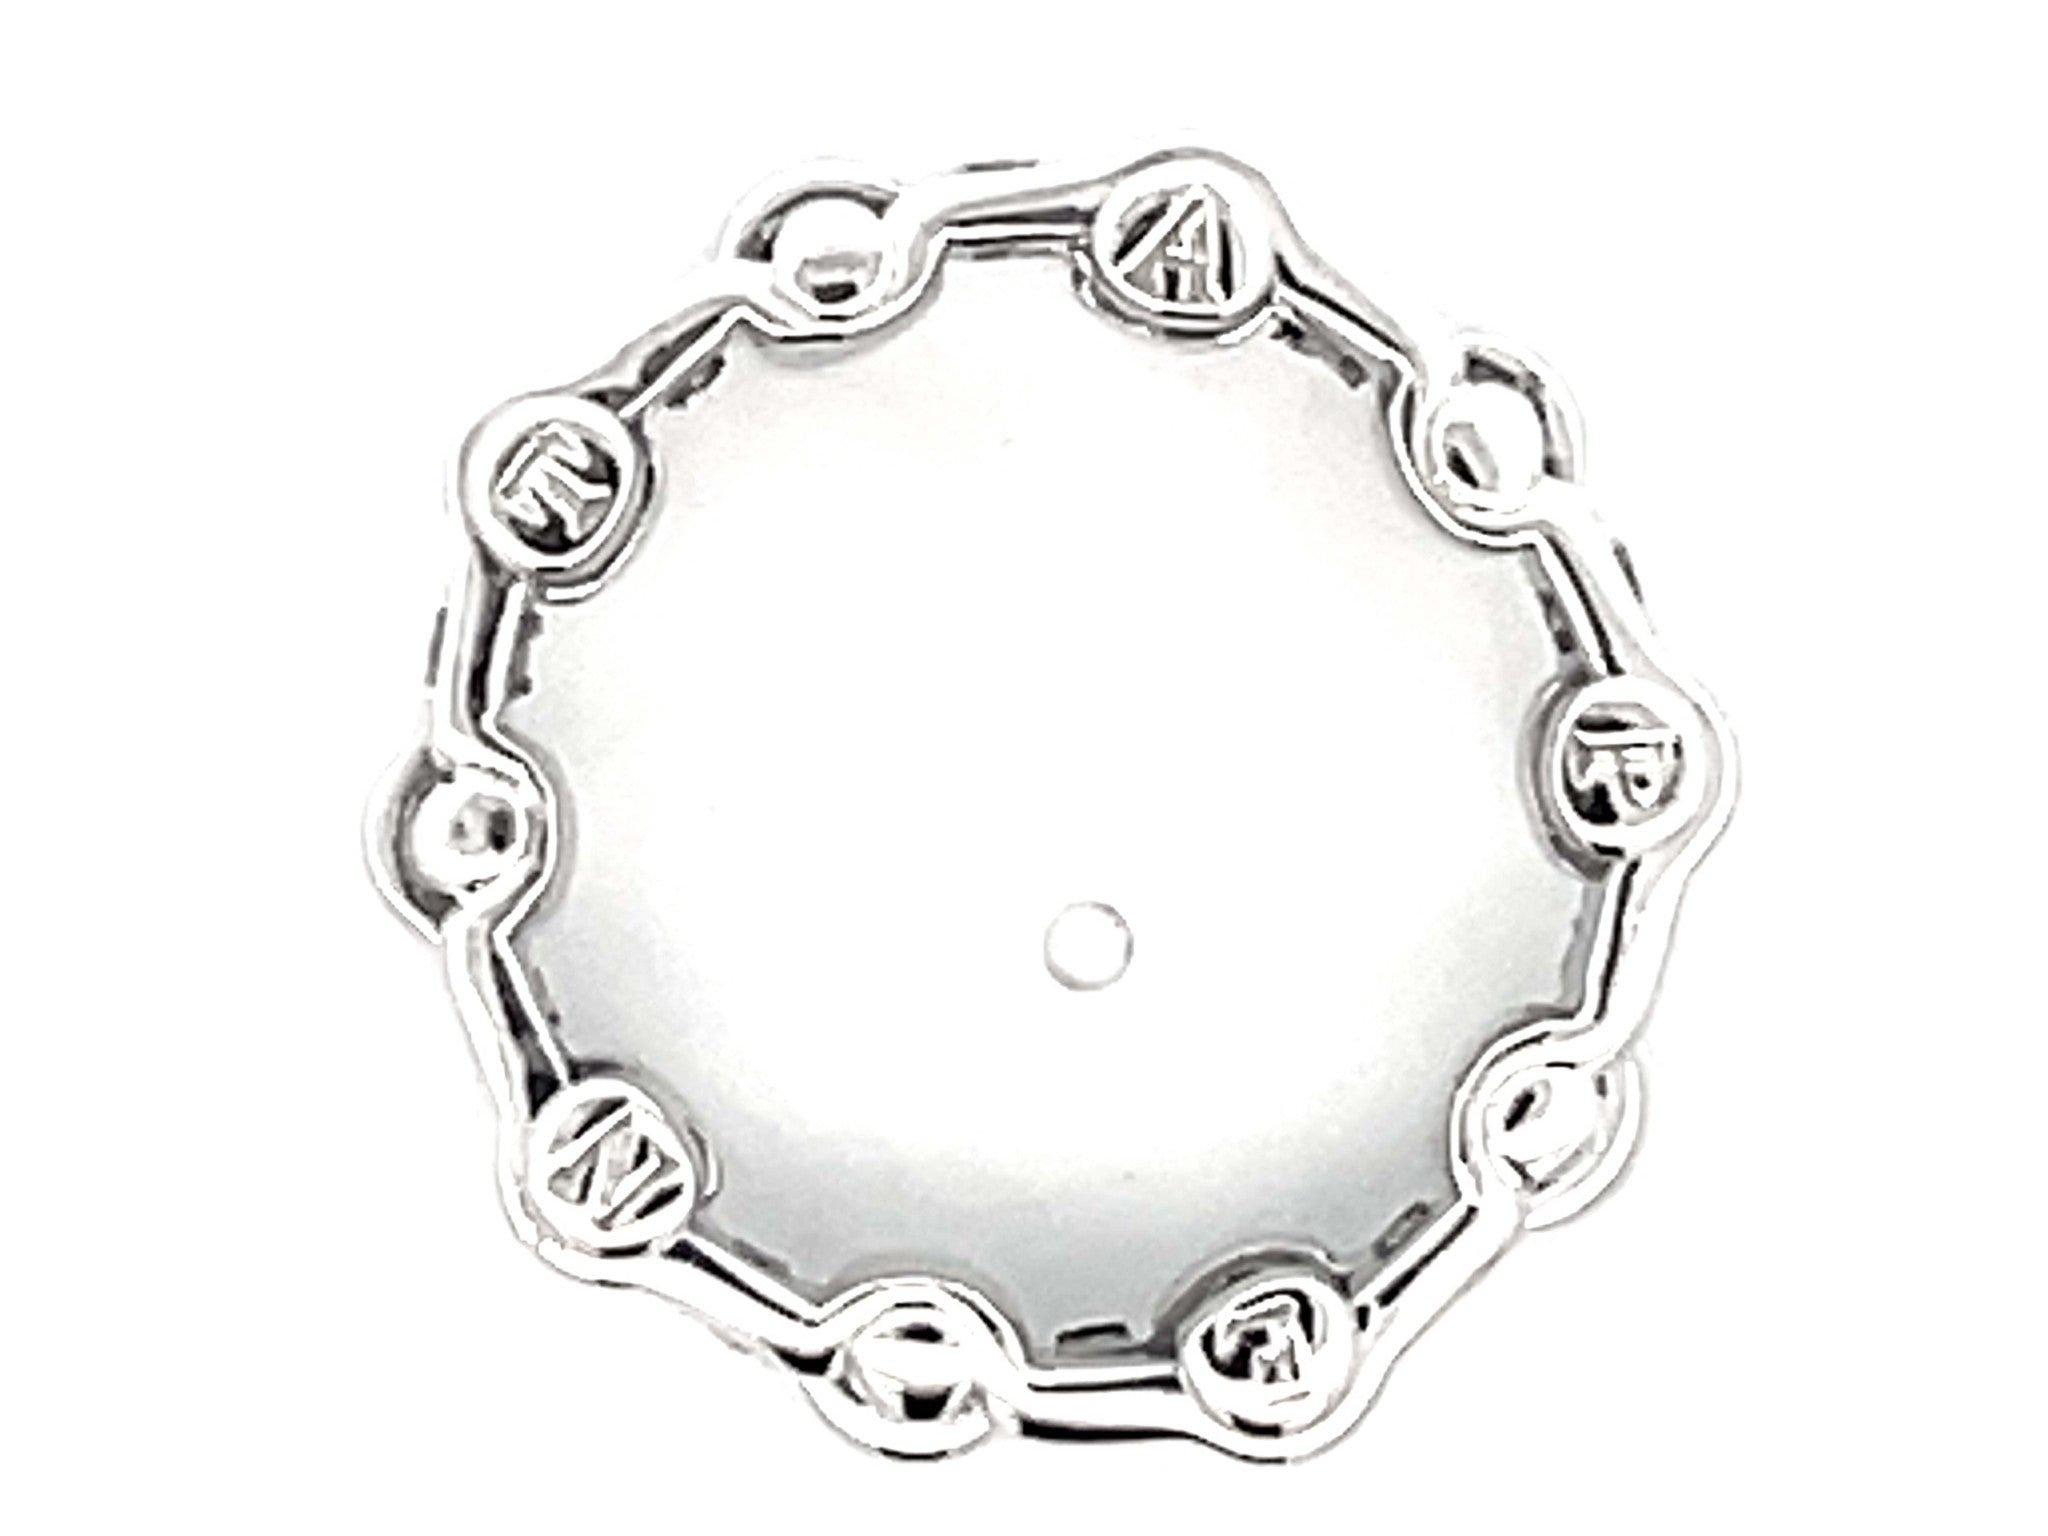 Diamond Alternating Riveted Wedding Band Ring in 18k White Gold